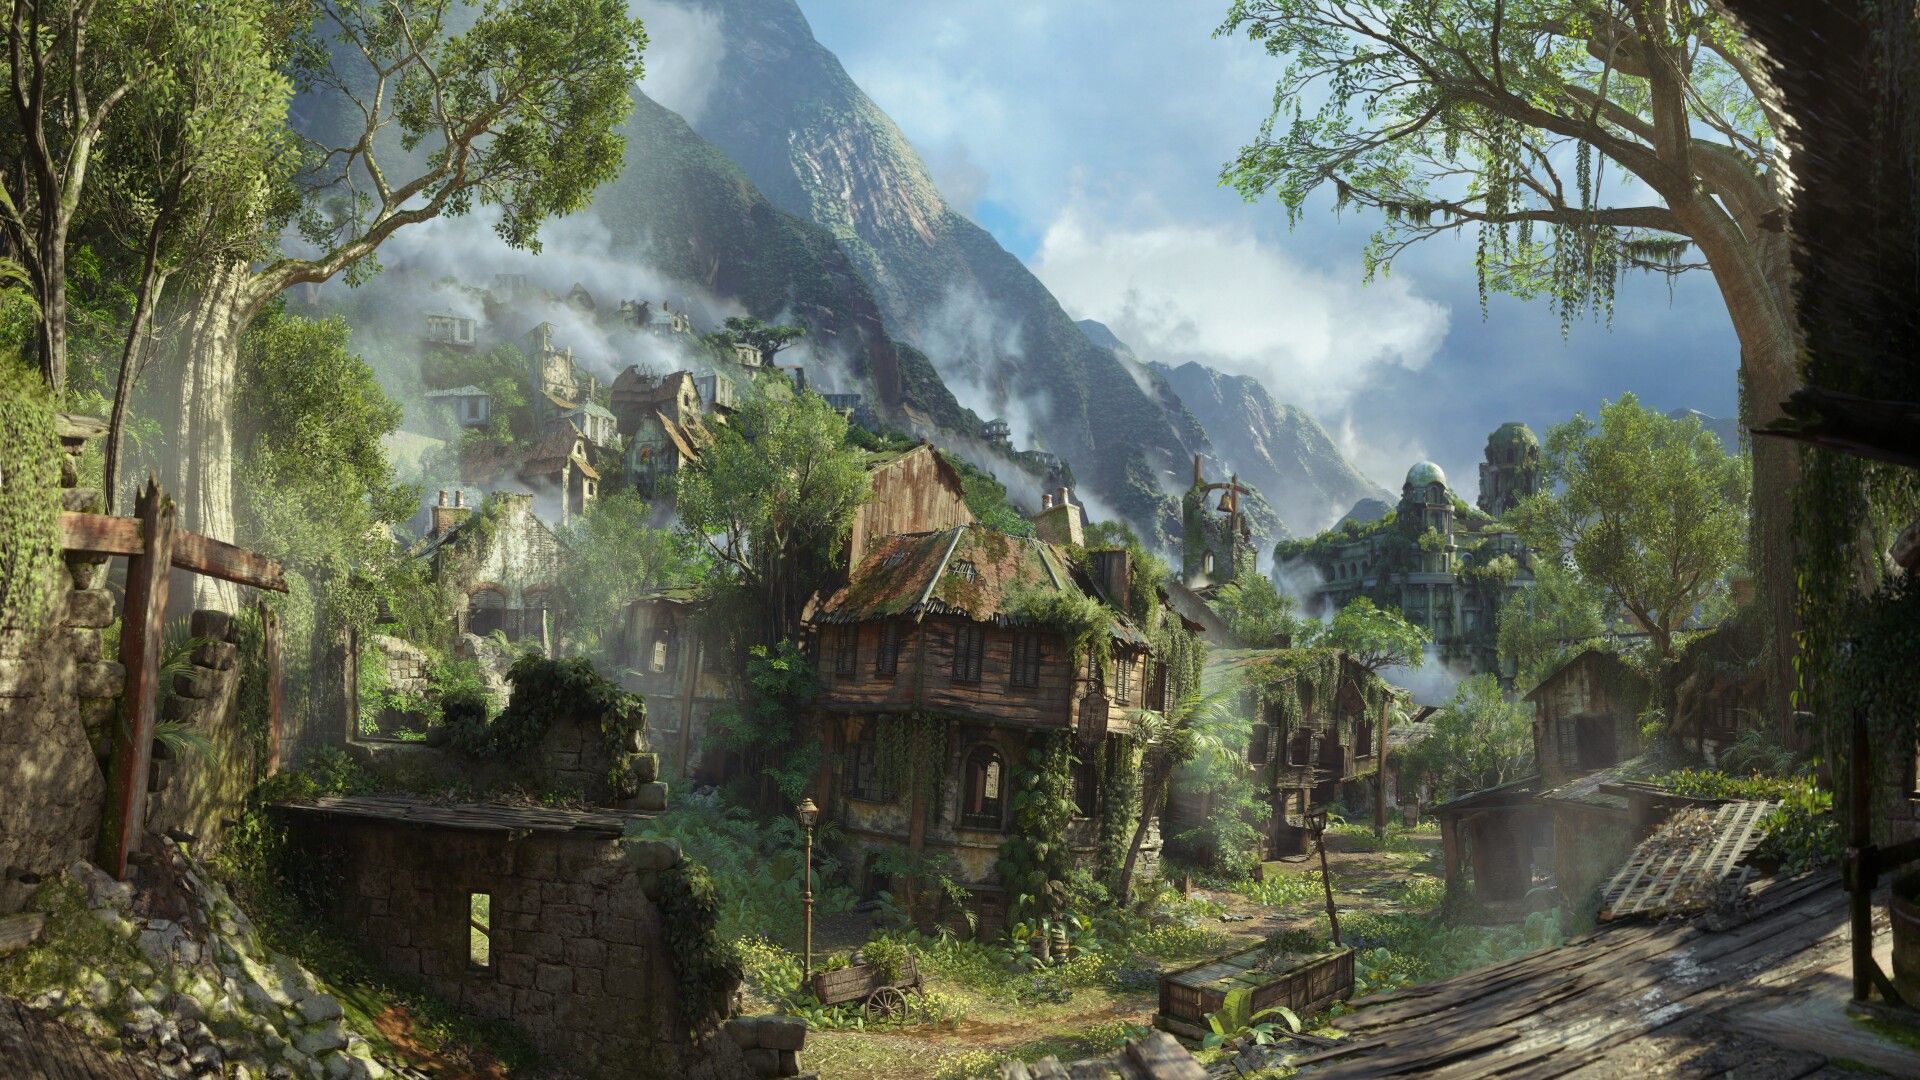 fondo de pantalla inexplorado hd,juego de acción y aventura,naturaleza,paisaje natural,juego de pc,selva